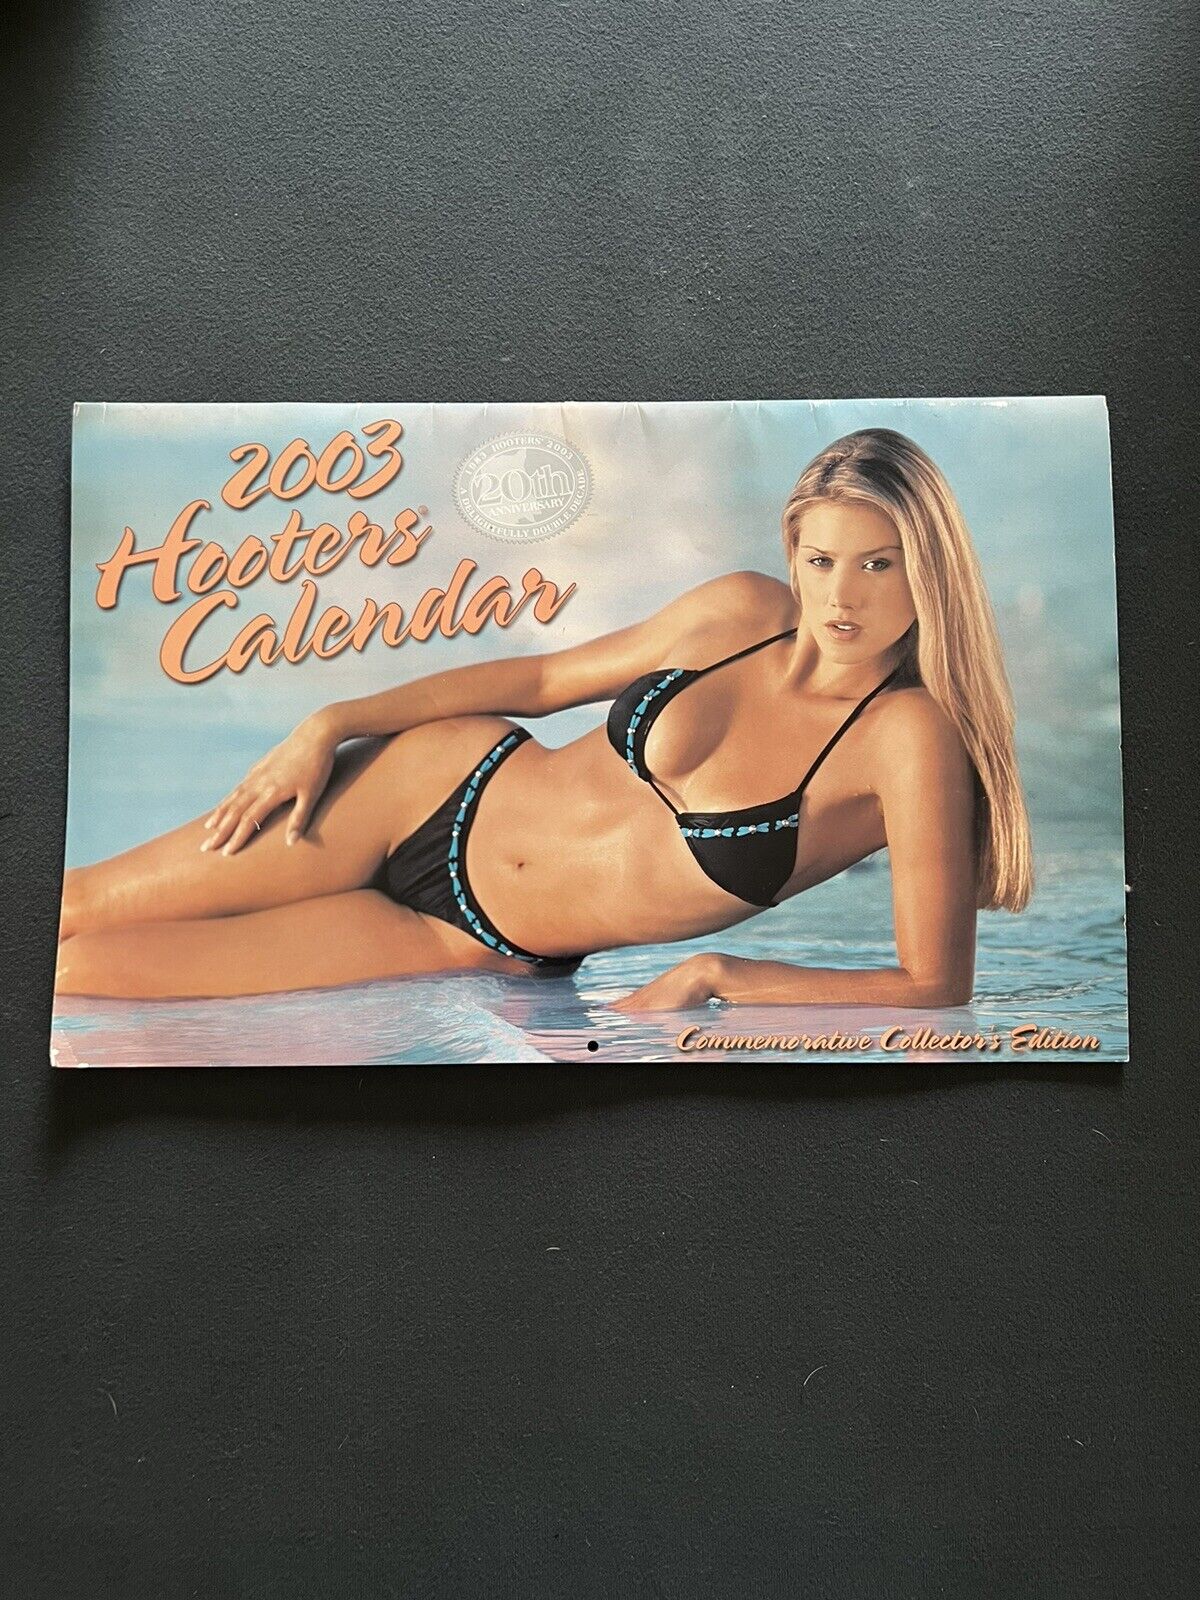 2003 Hooters Calendar 20th Anniversary Commemorative Collectors Edition 11x17 